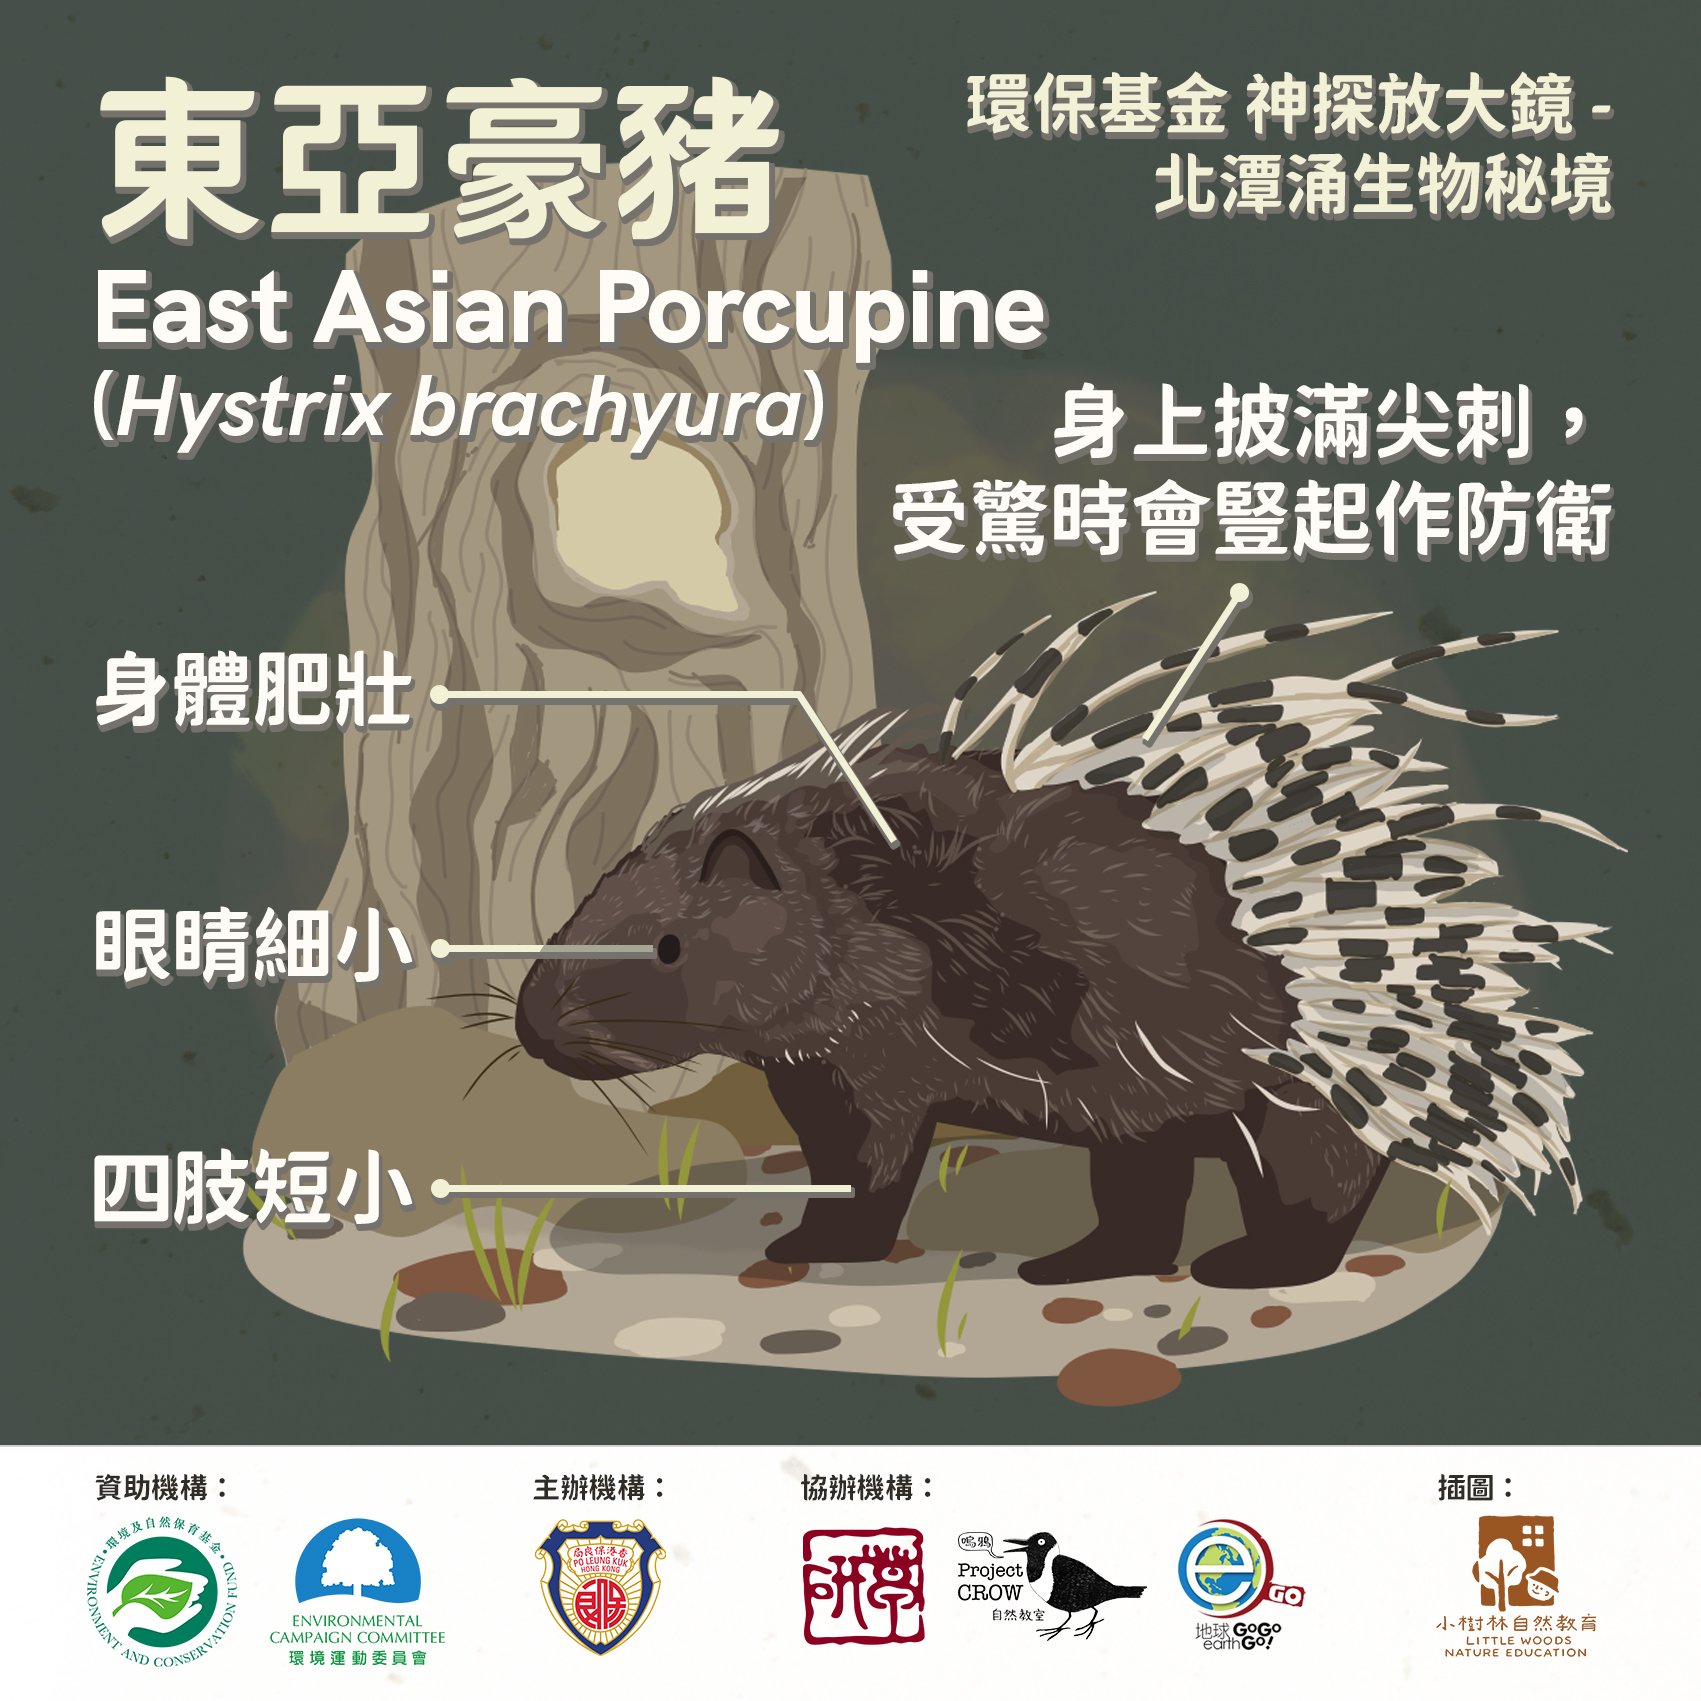 East Asian Porcupine